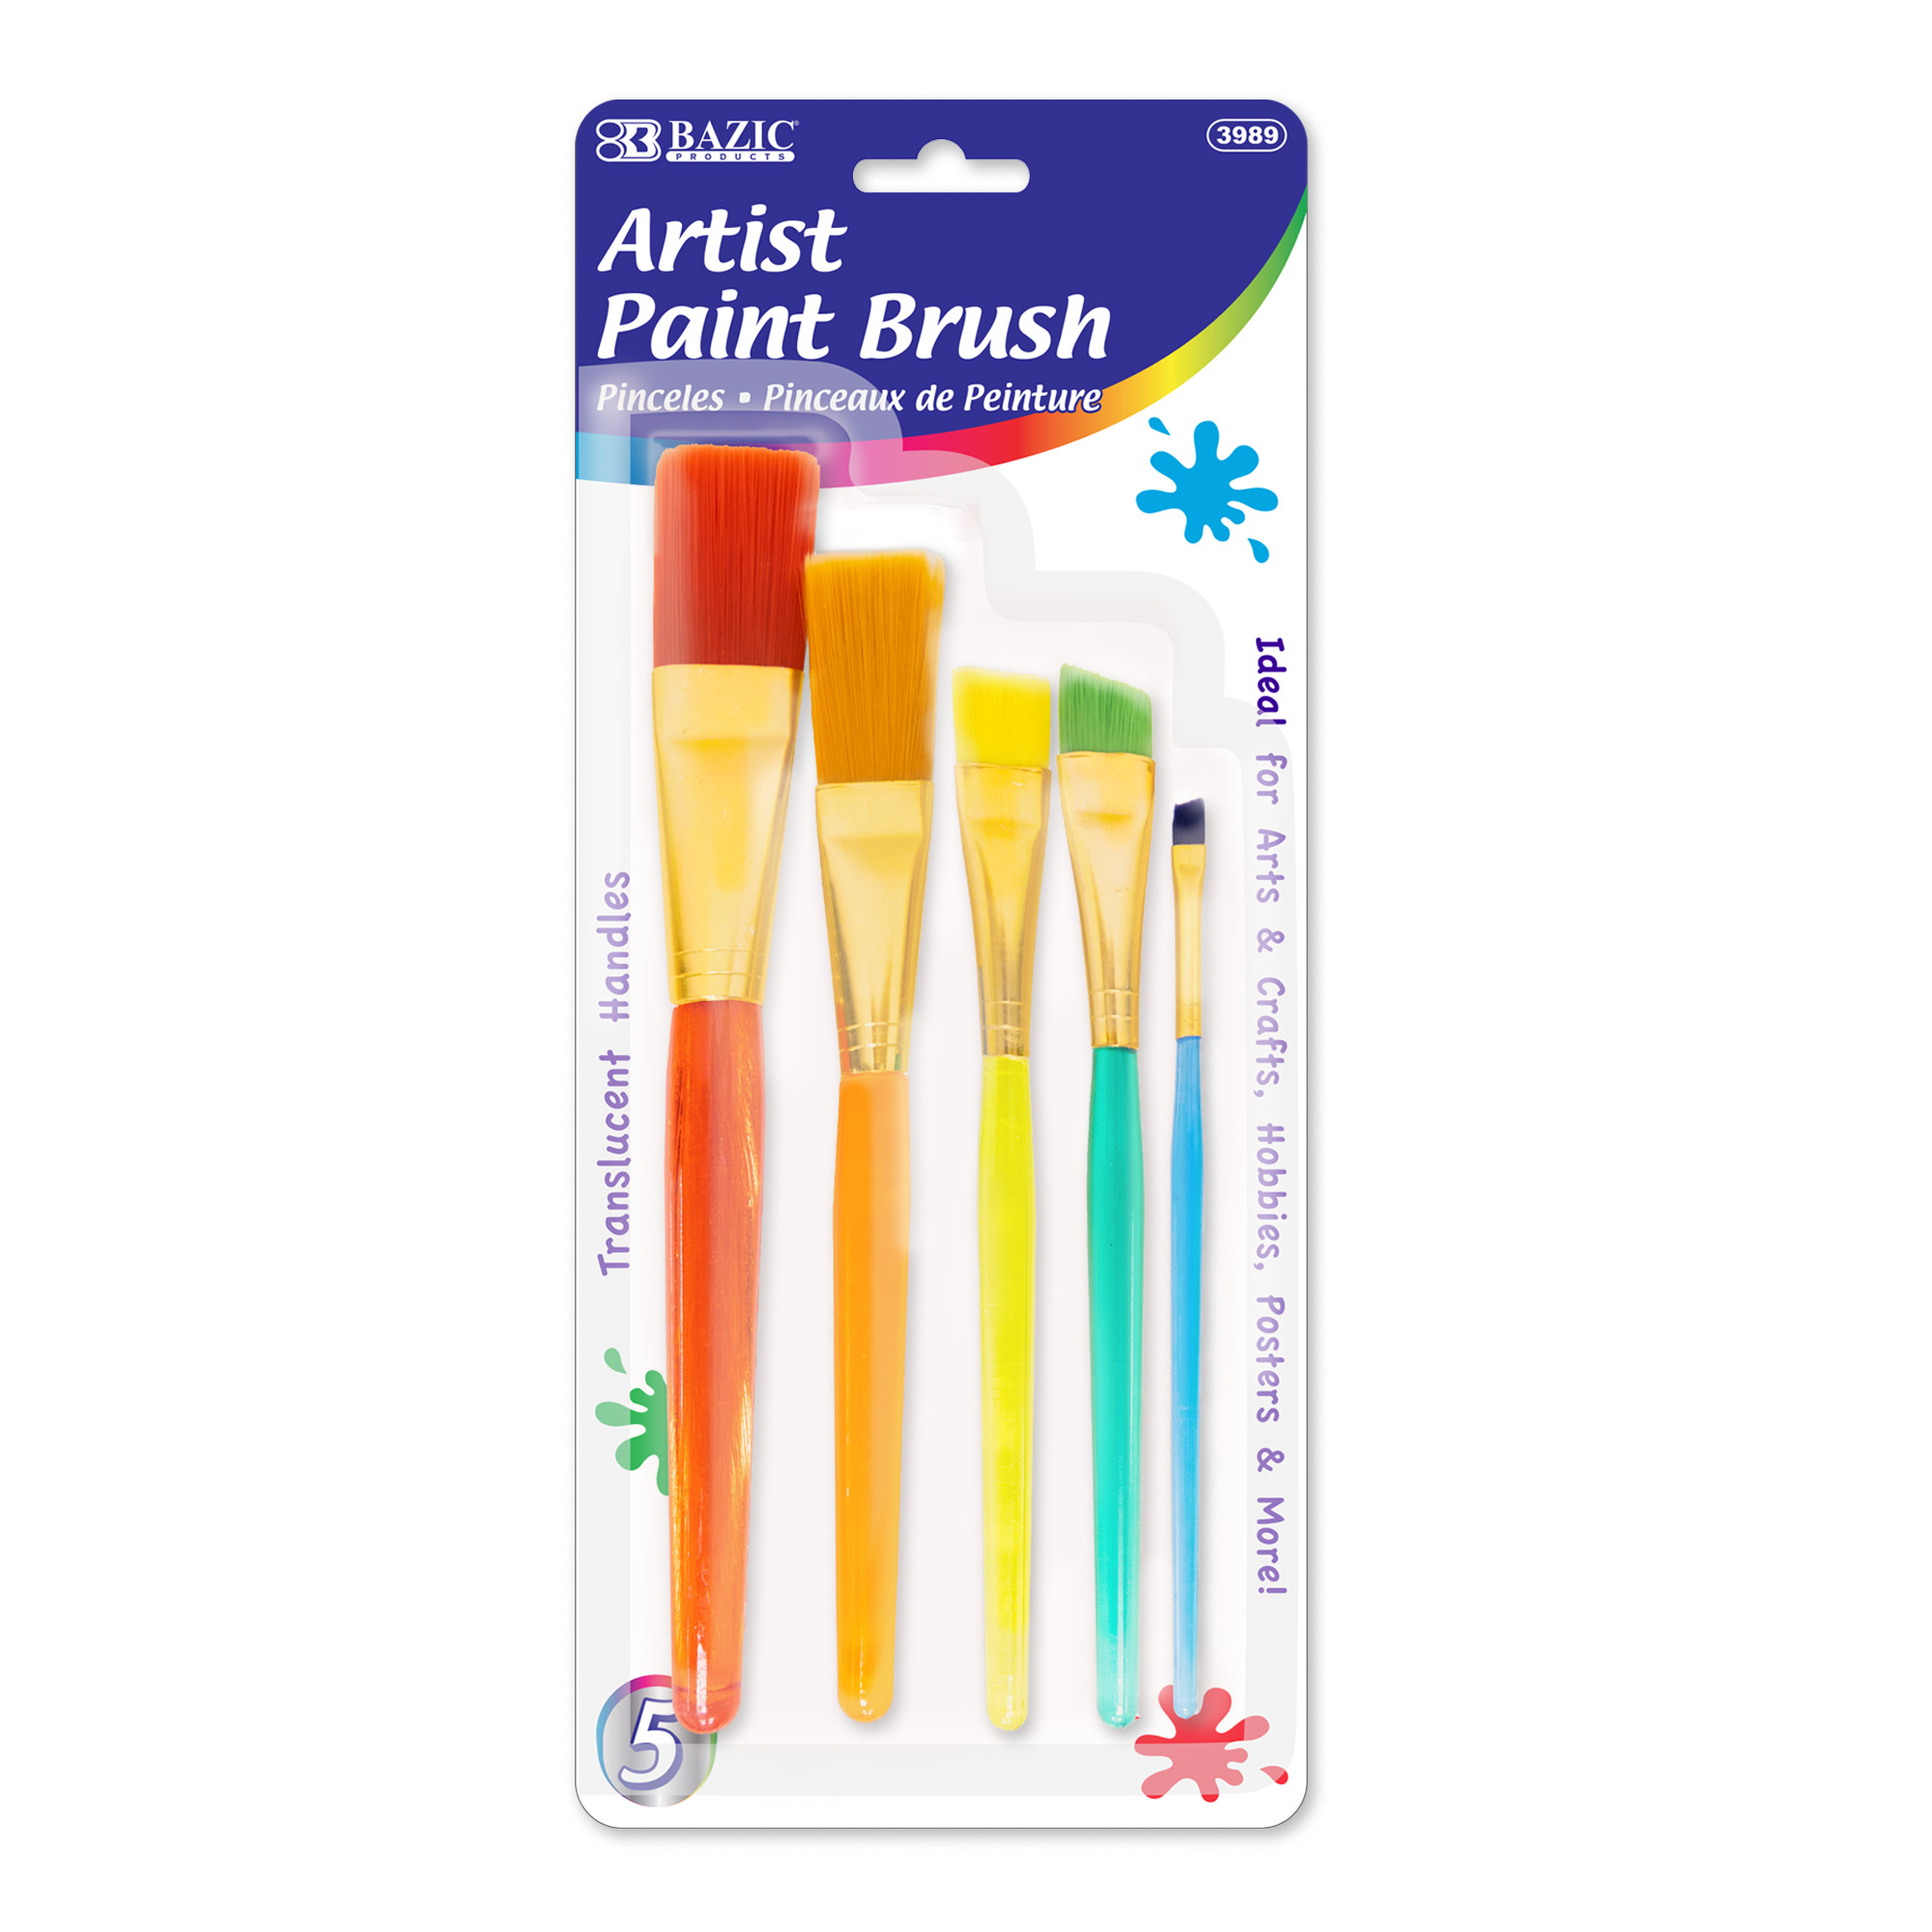 Stiff Nylon Bristle Detail Brush — BEECK Mineral Paints